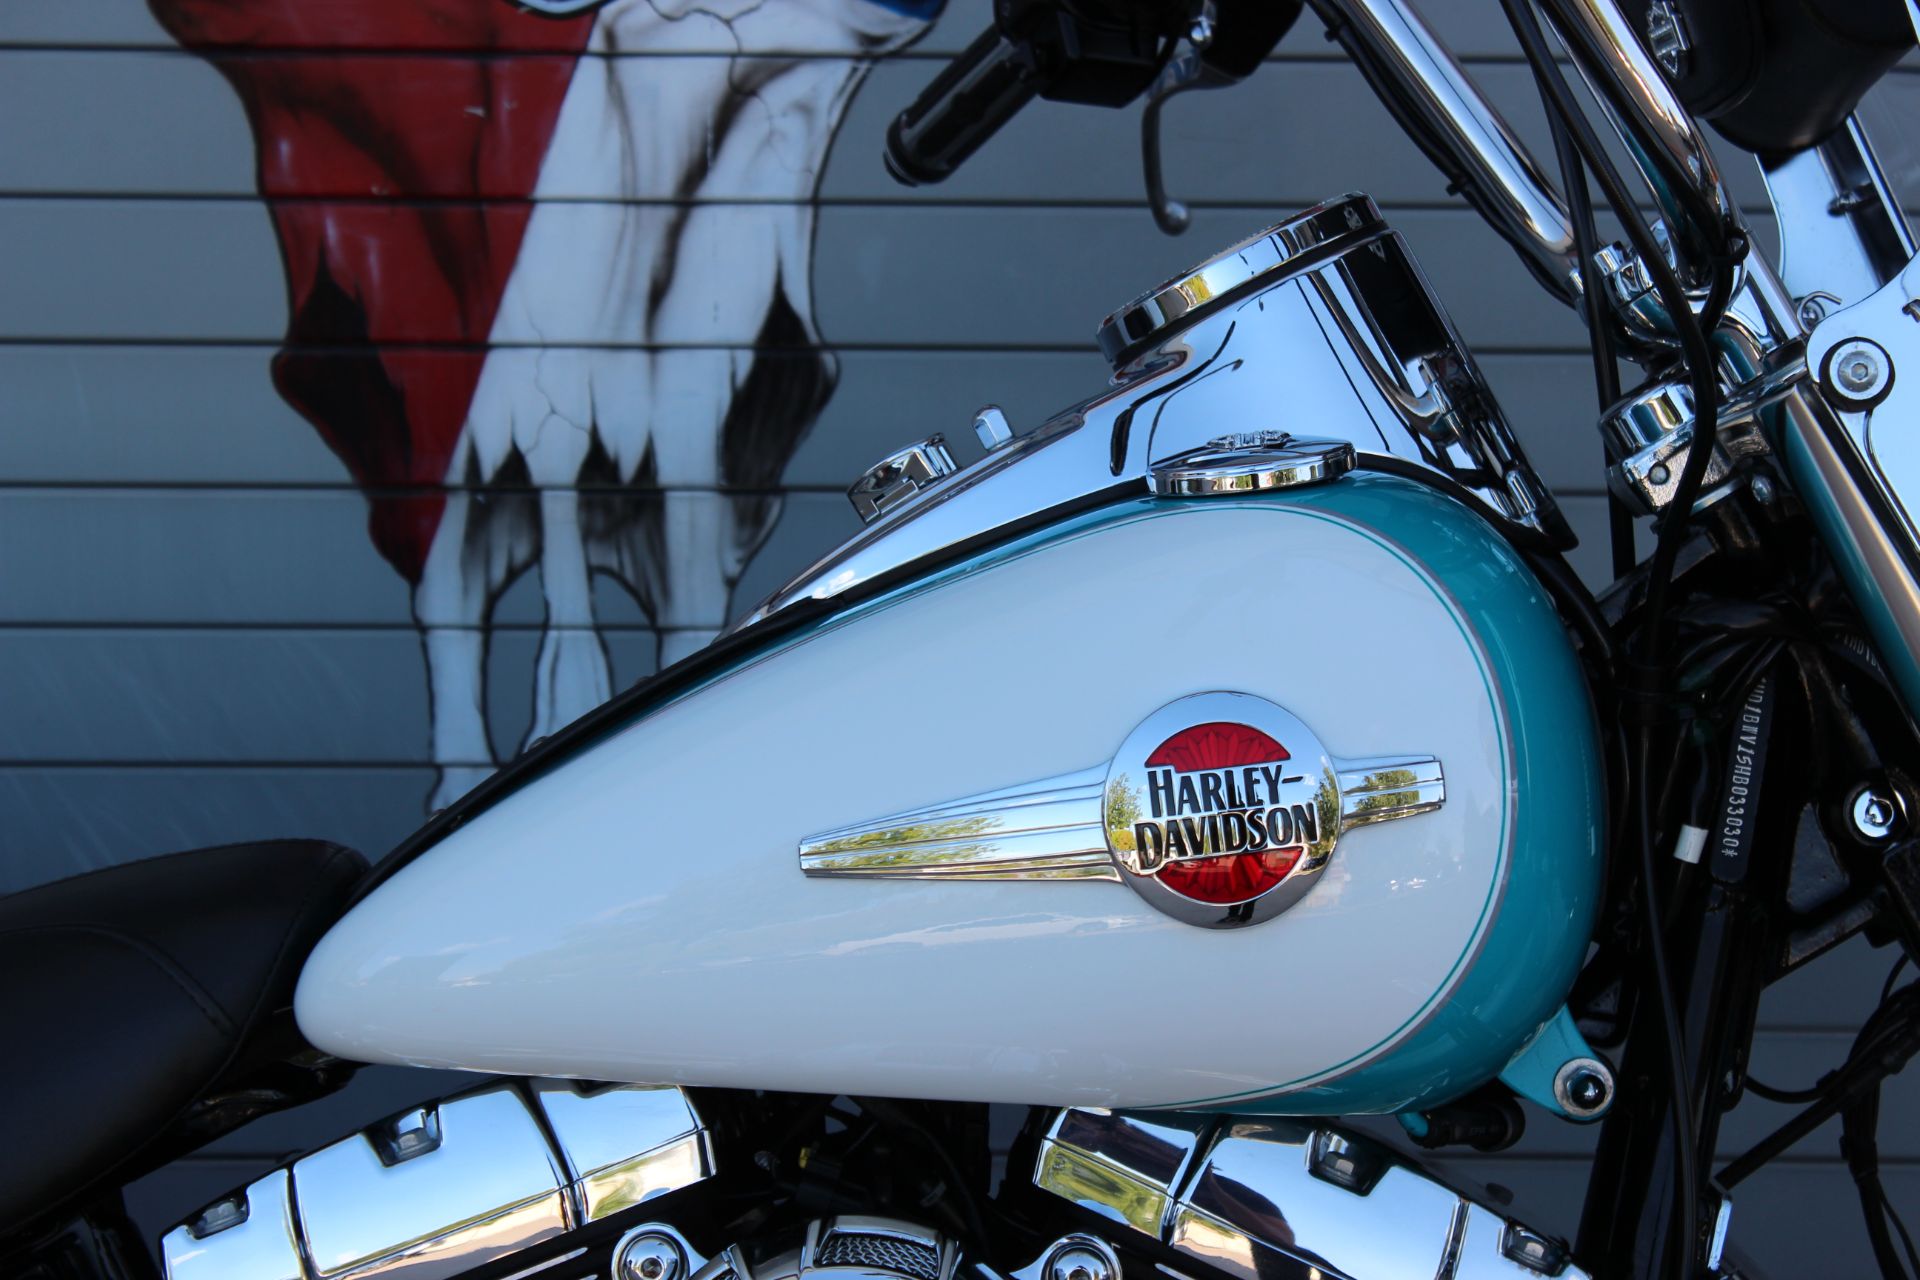 2017 Harley-Davidson Heritage Softail® Classic in Grand Prairie, Texas - Photo 6